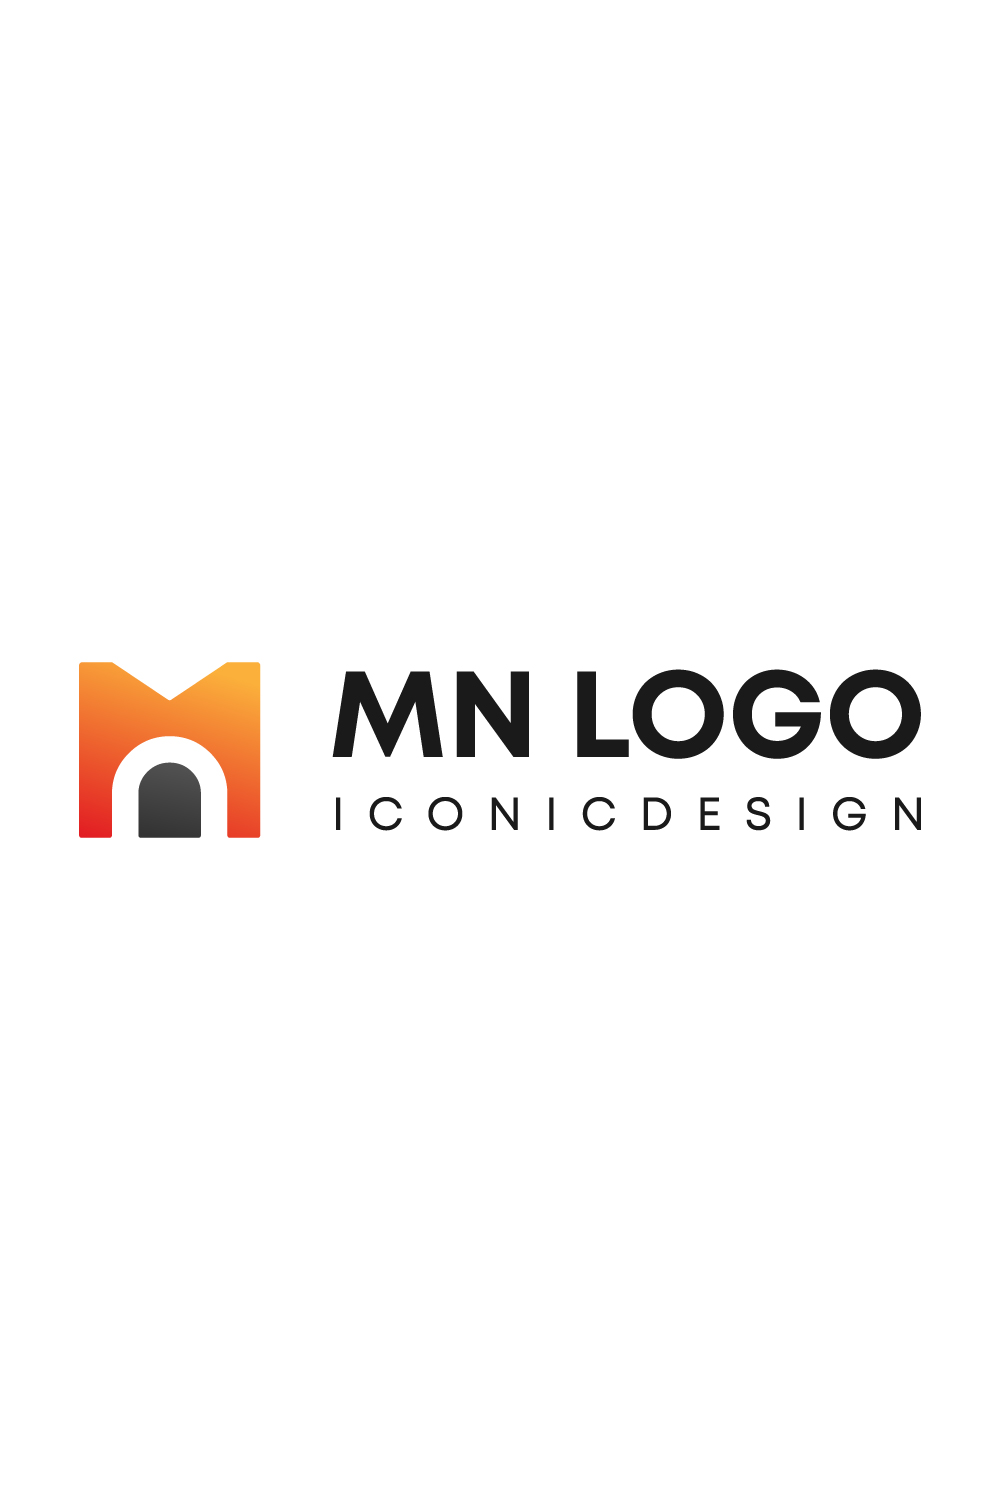 MN logo Design pinterest preview image.